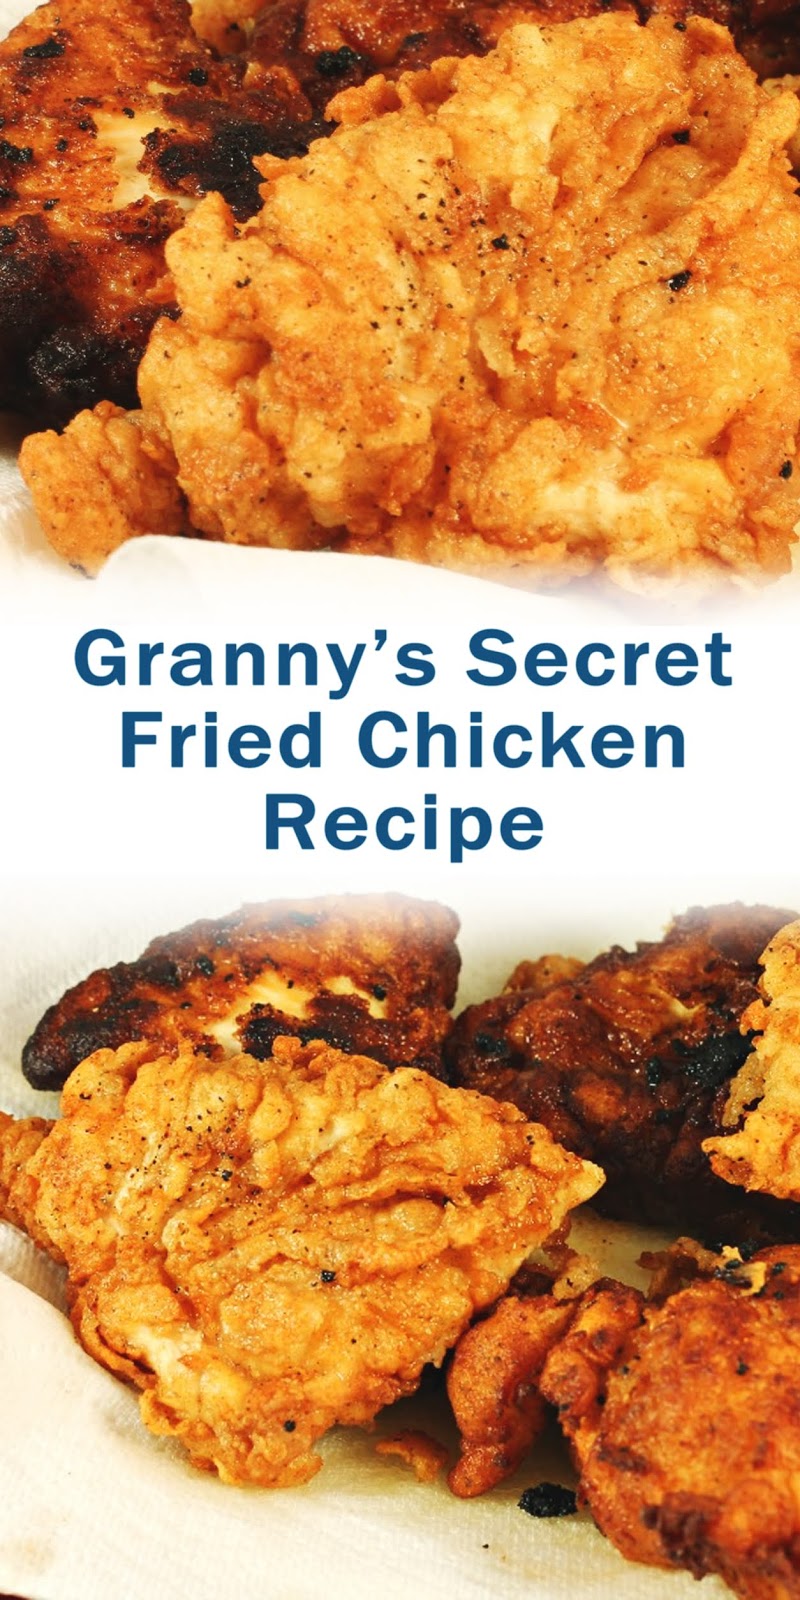 Granny’s Secret Fried Chicken Recipe